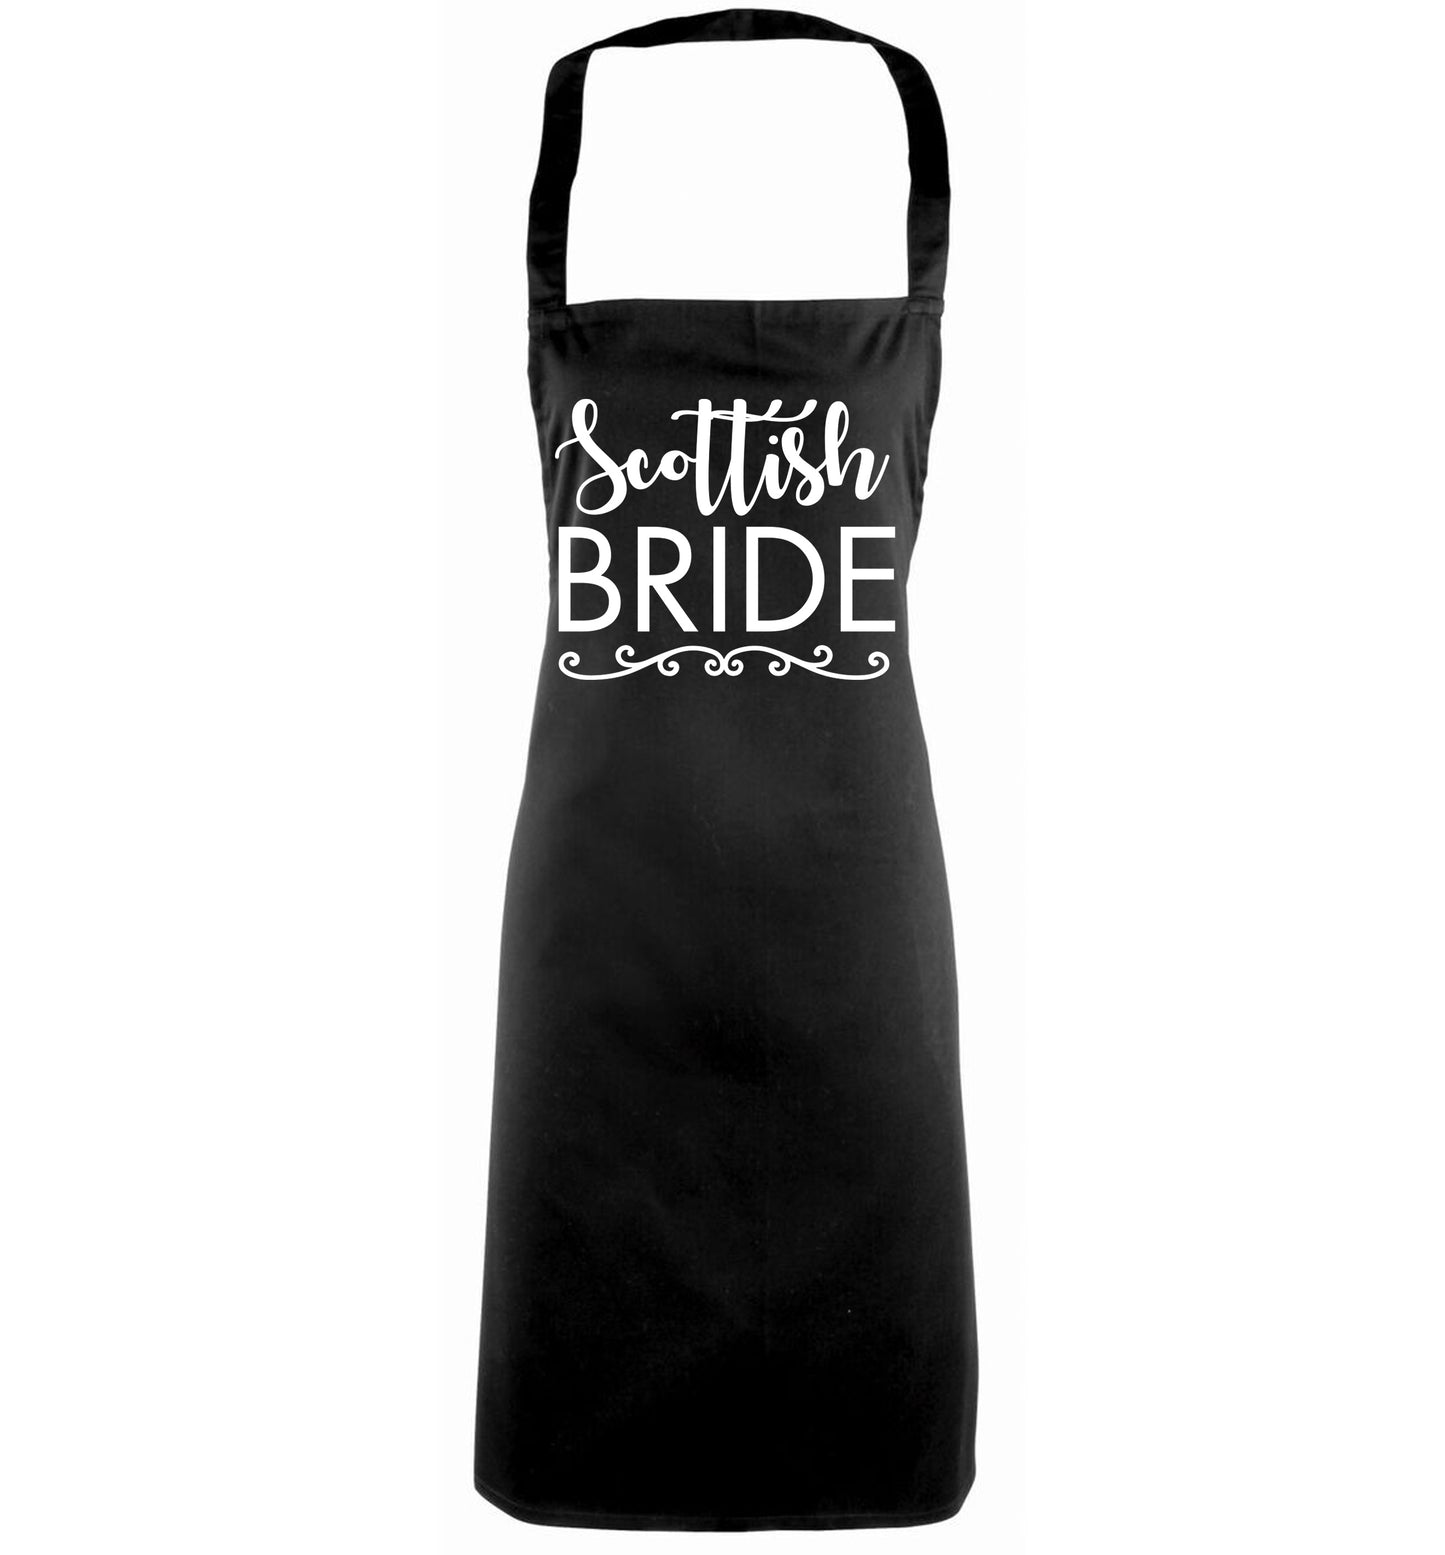 Scottish Bride black apron